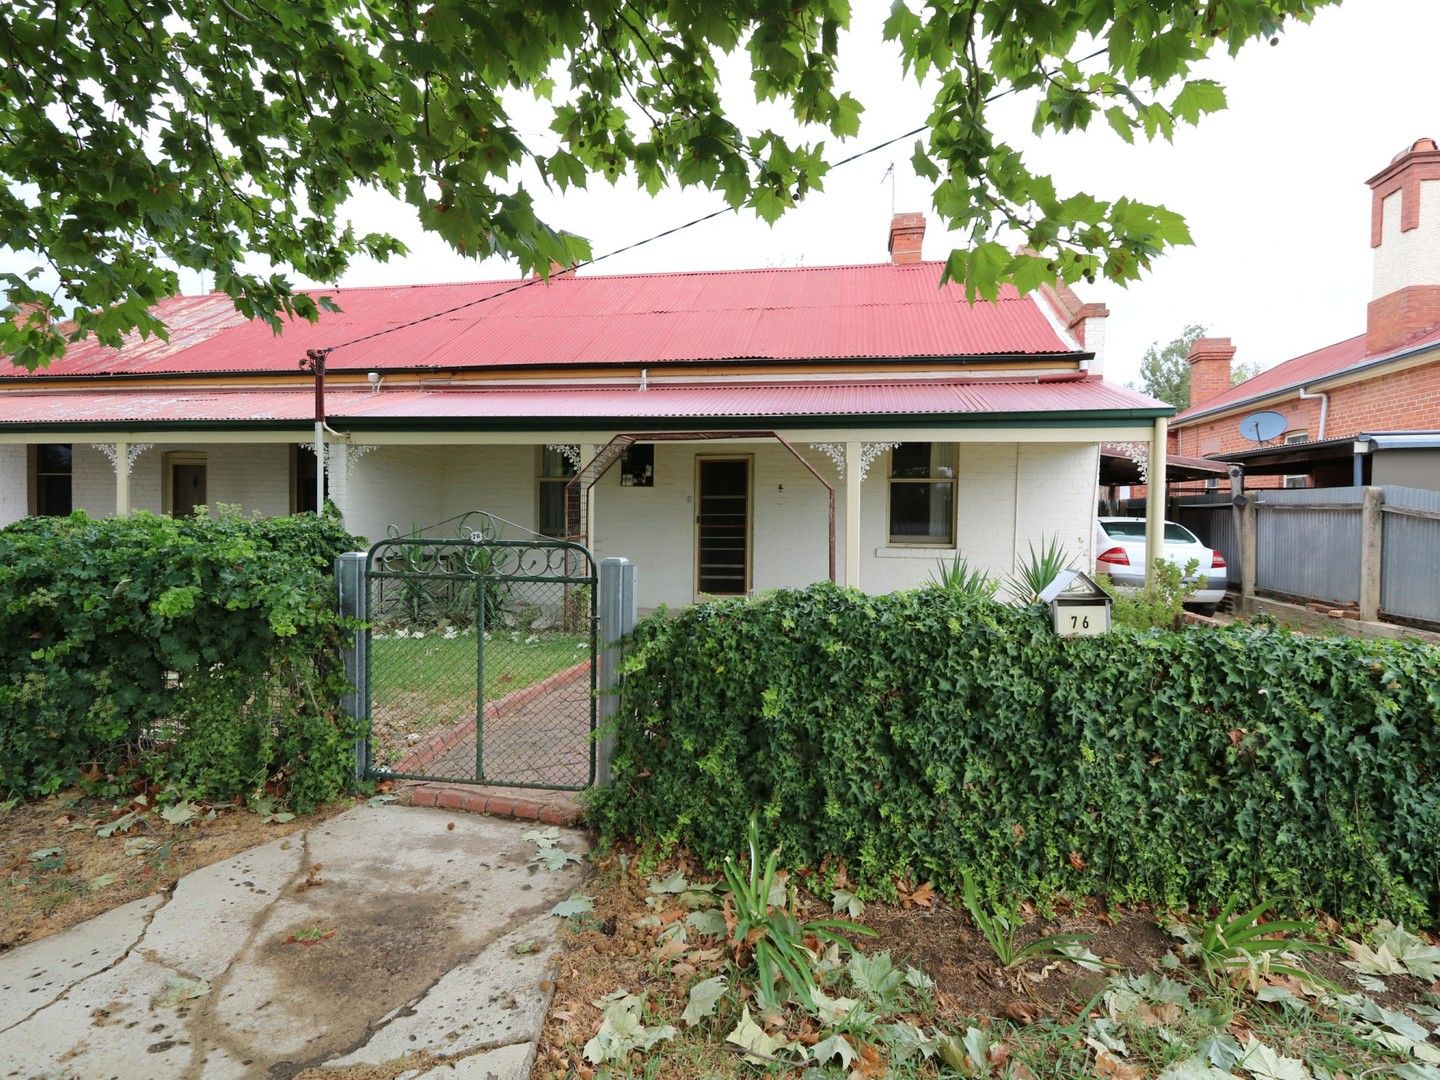 3 bedrooms House in 76 Kincaid Street WAGGA WAGGA NSW, 2650